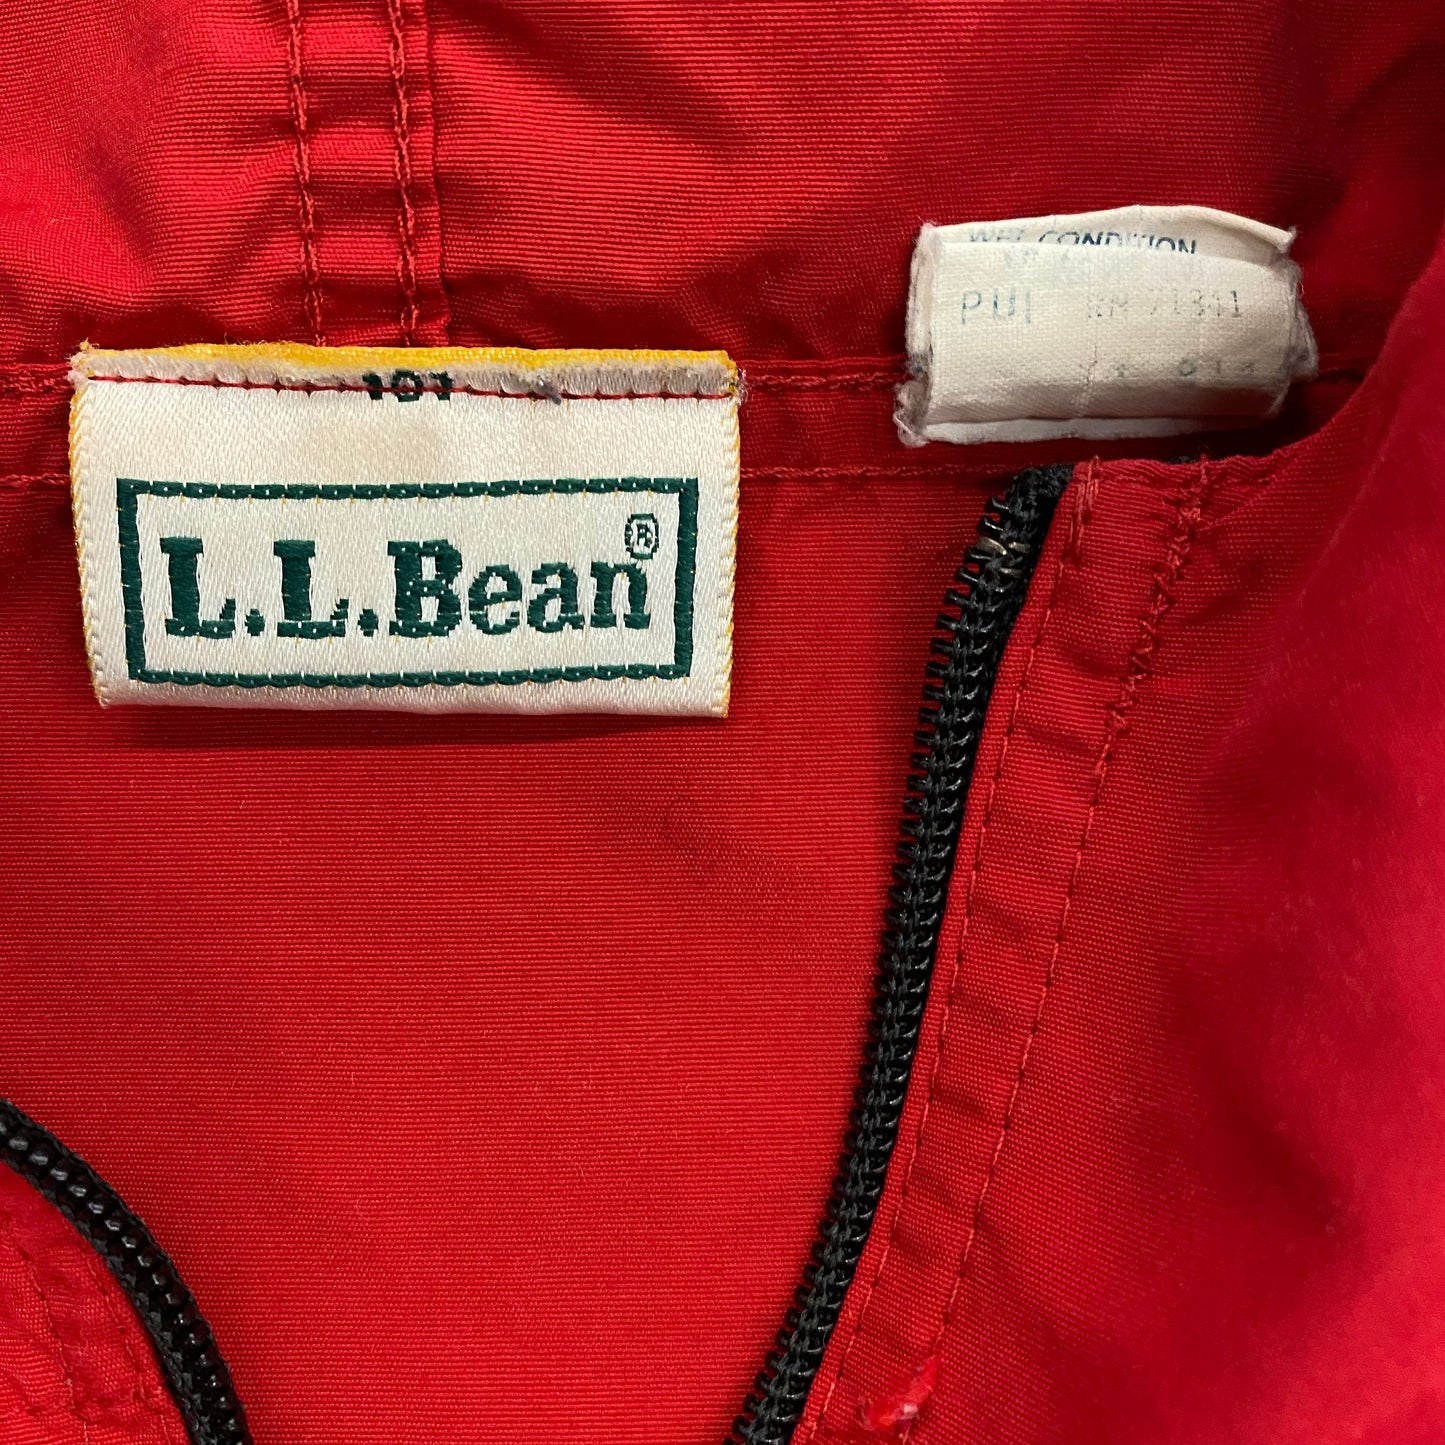 Vintage 90s LL Bean Red Anorak Windbreaker Jacket - Size XL